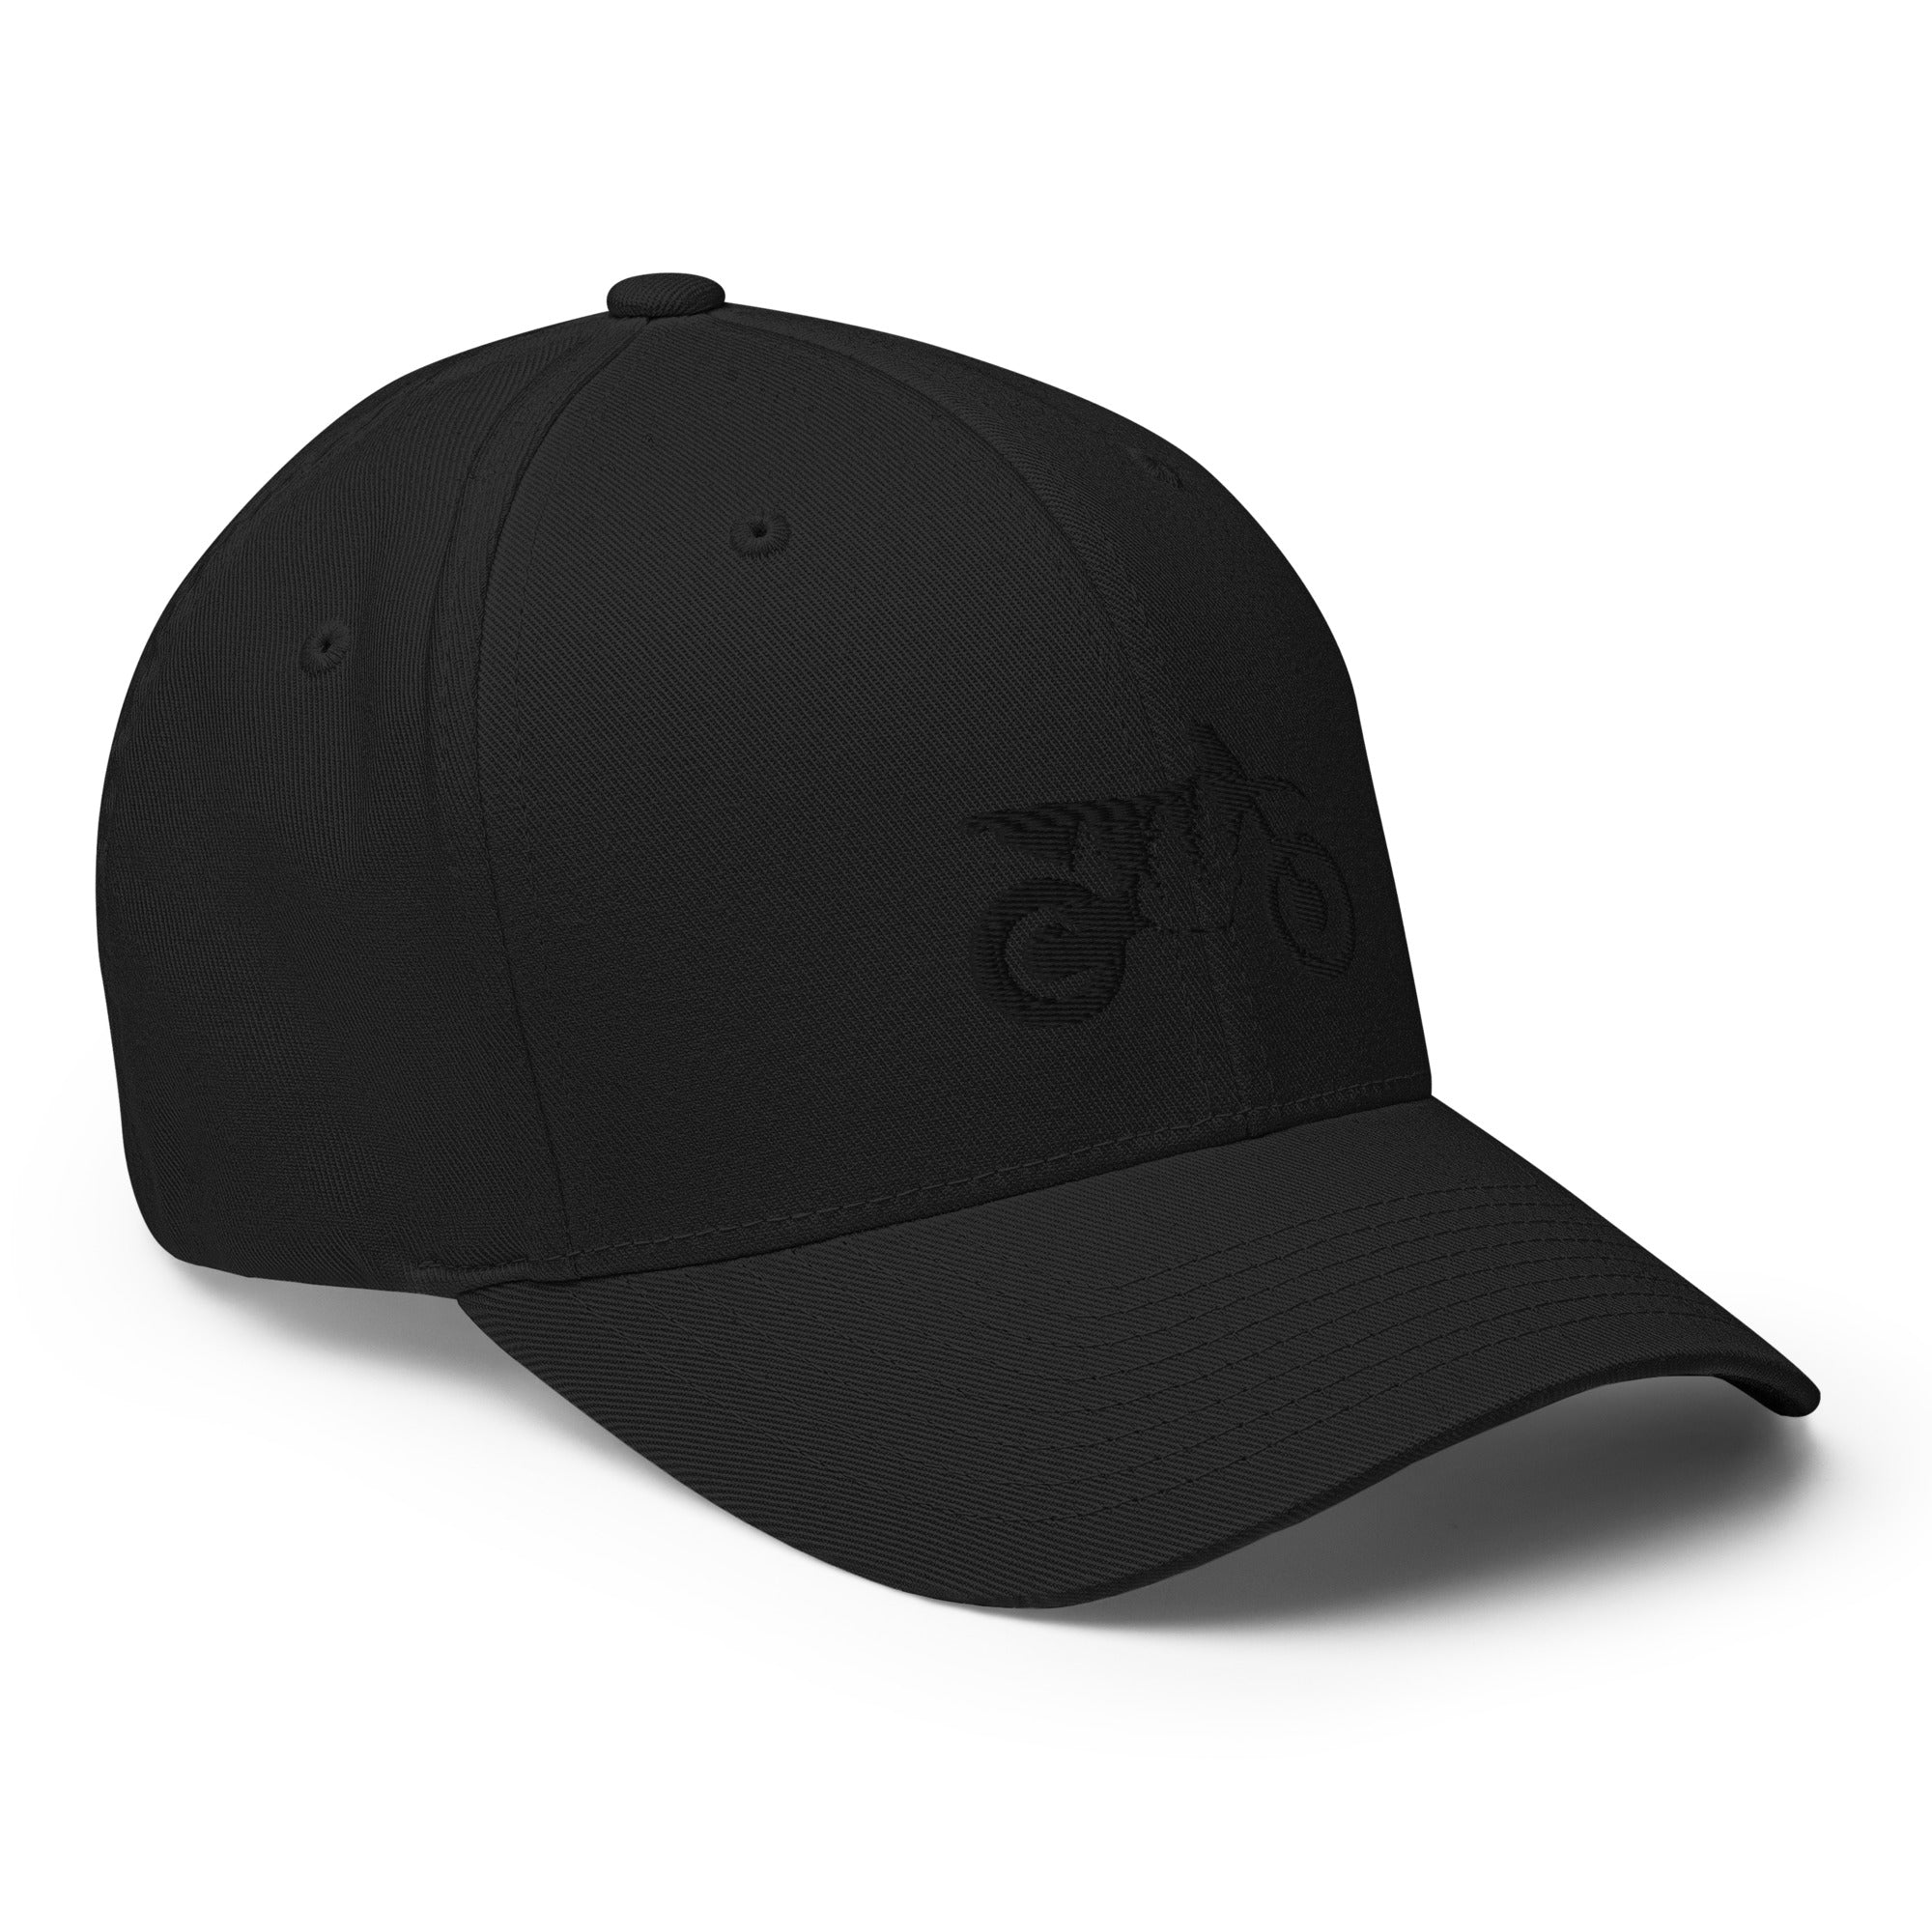 TreeBike Hat, Fitted, Black